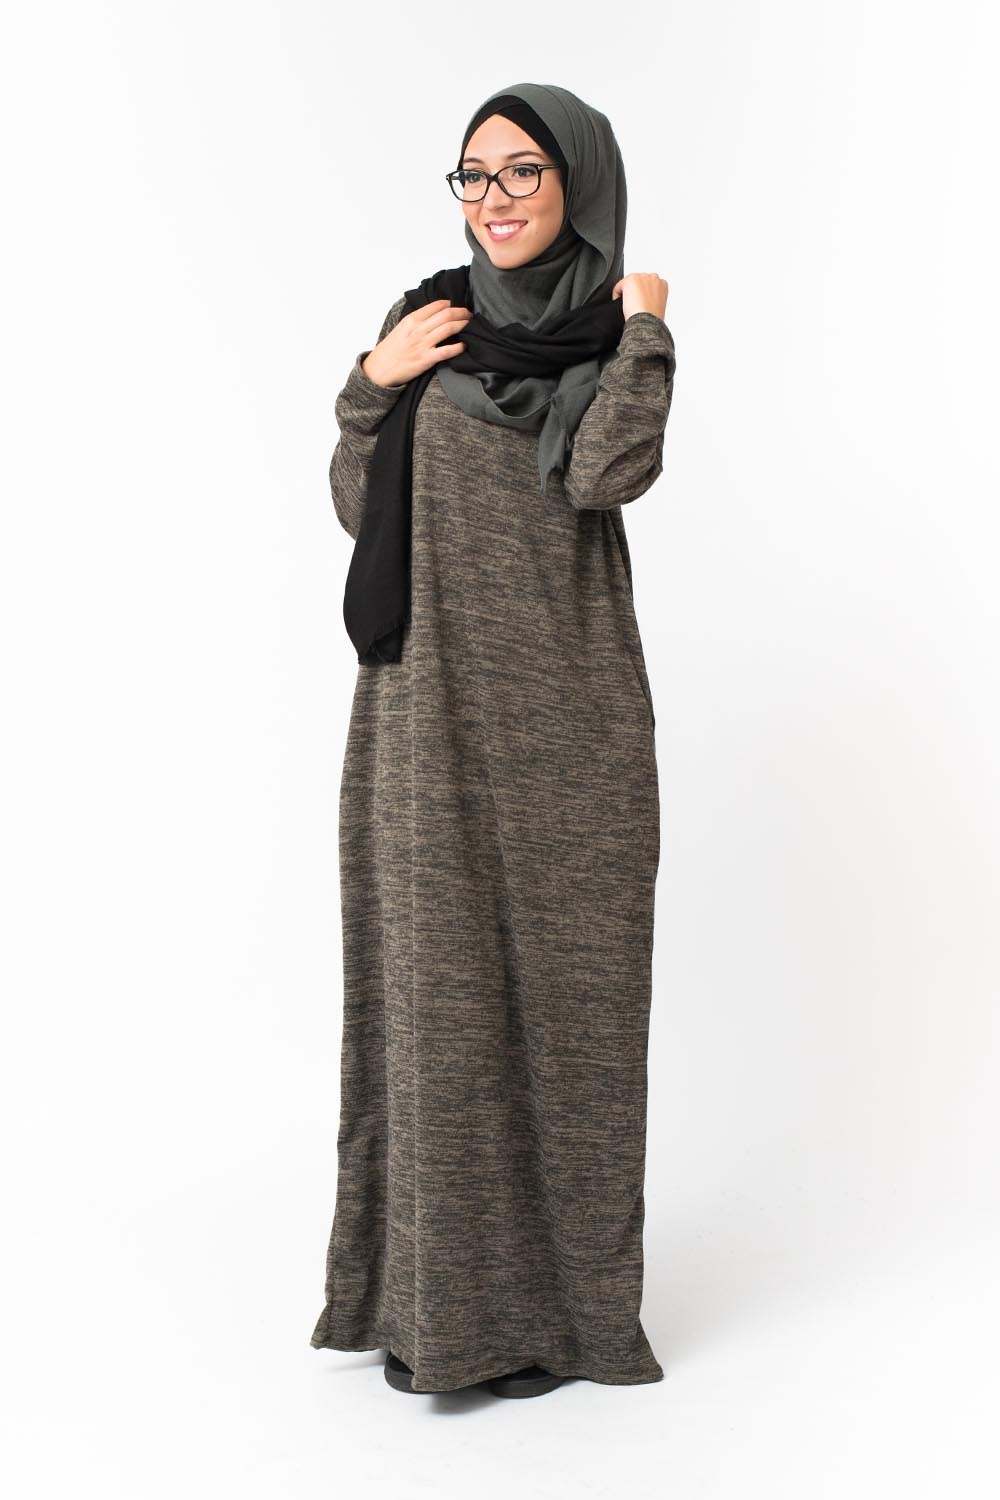  Robe  hiver  femmes musulmanes